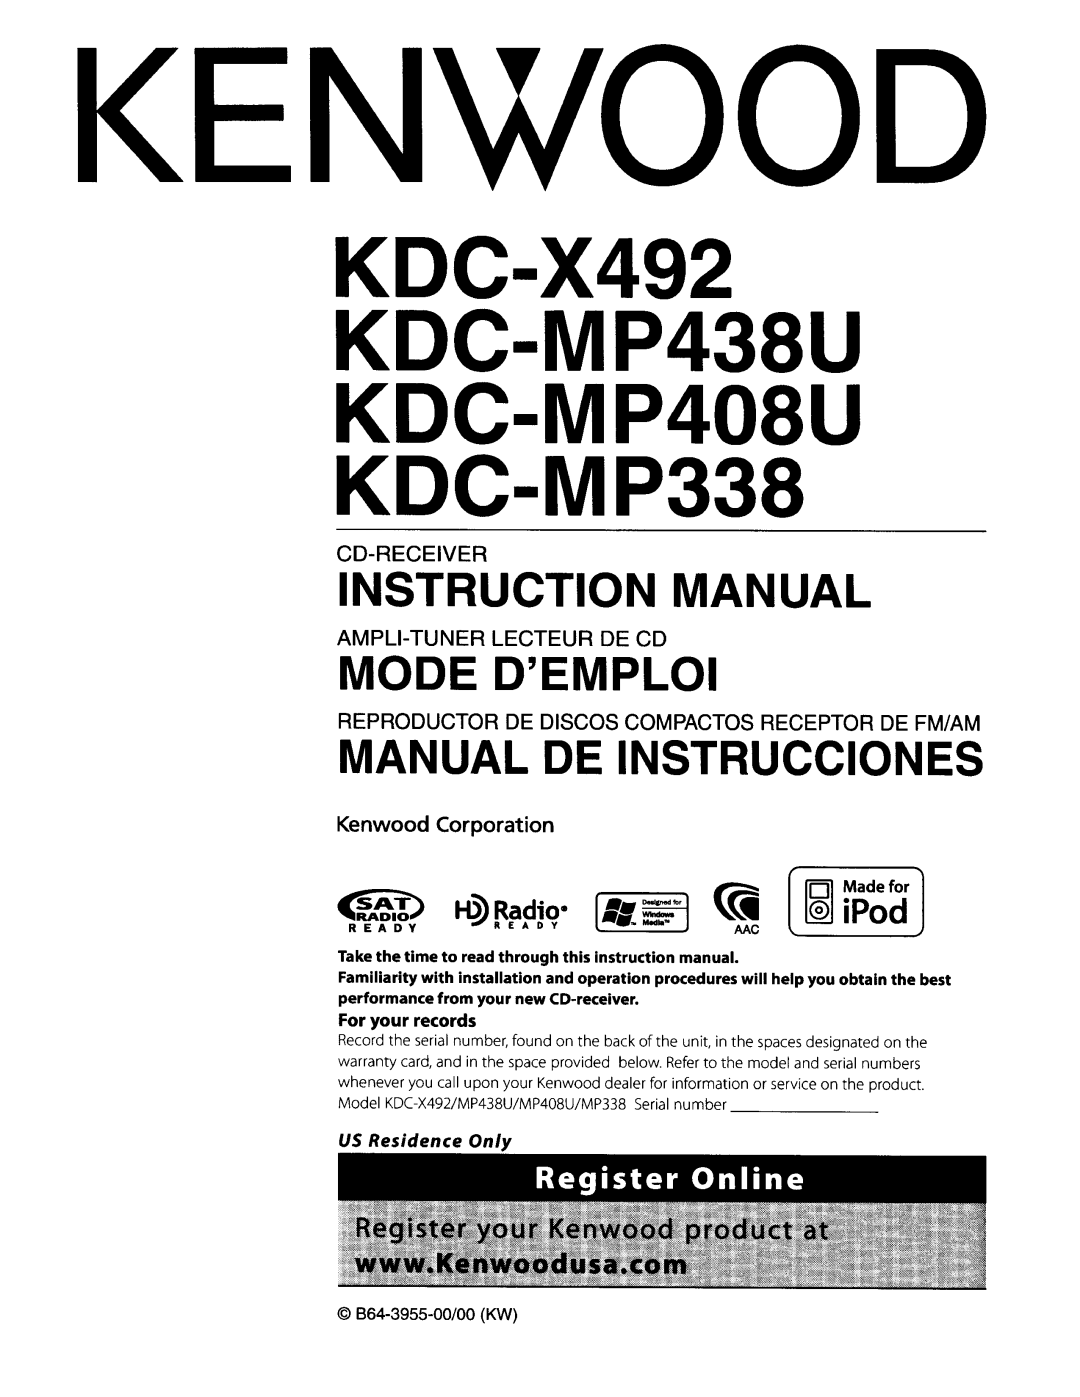 Kenwood instruction manual ~ H3Radio·, KDC-X492 KDC-MP438U KDC-MP408U KDC-MP338, Mode Demploi, Manual De Instrucciones 